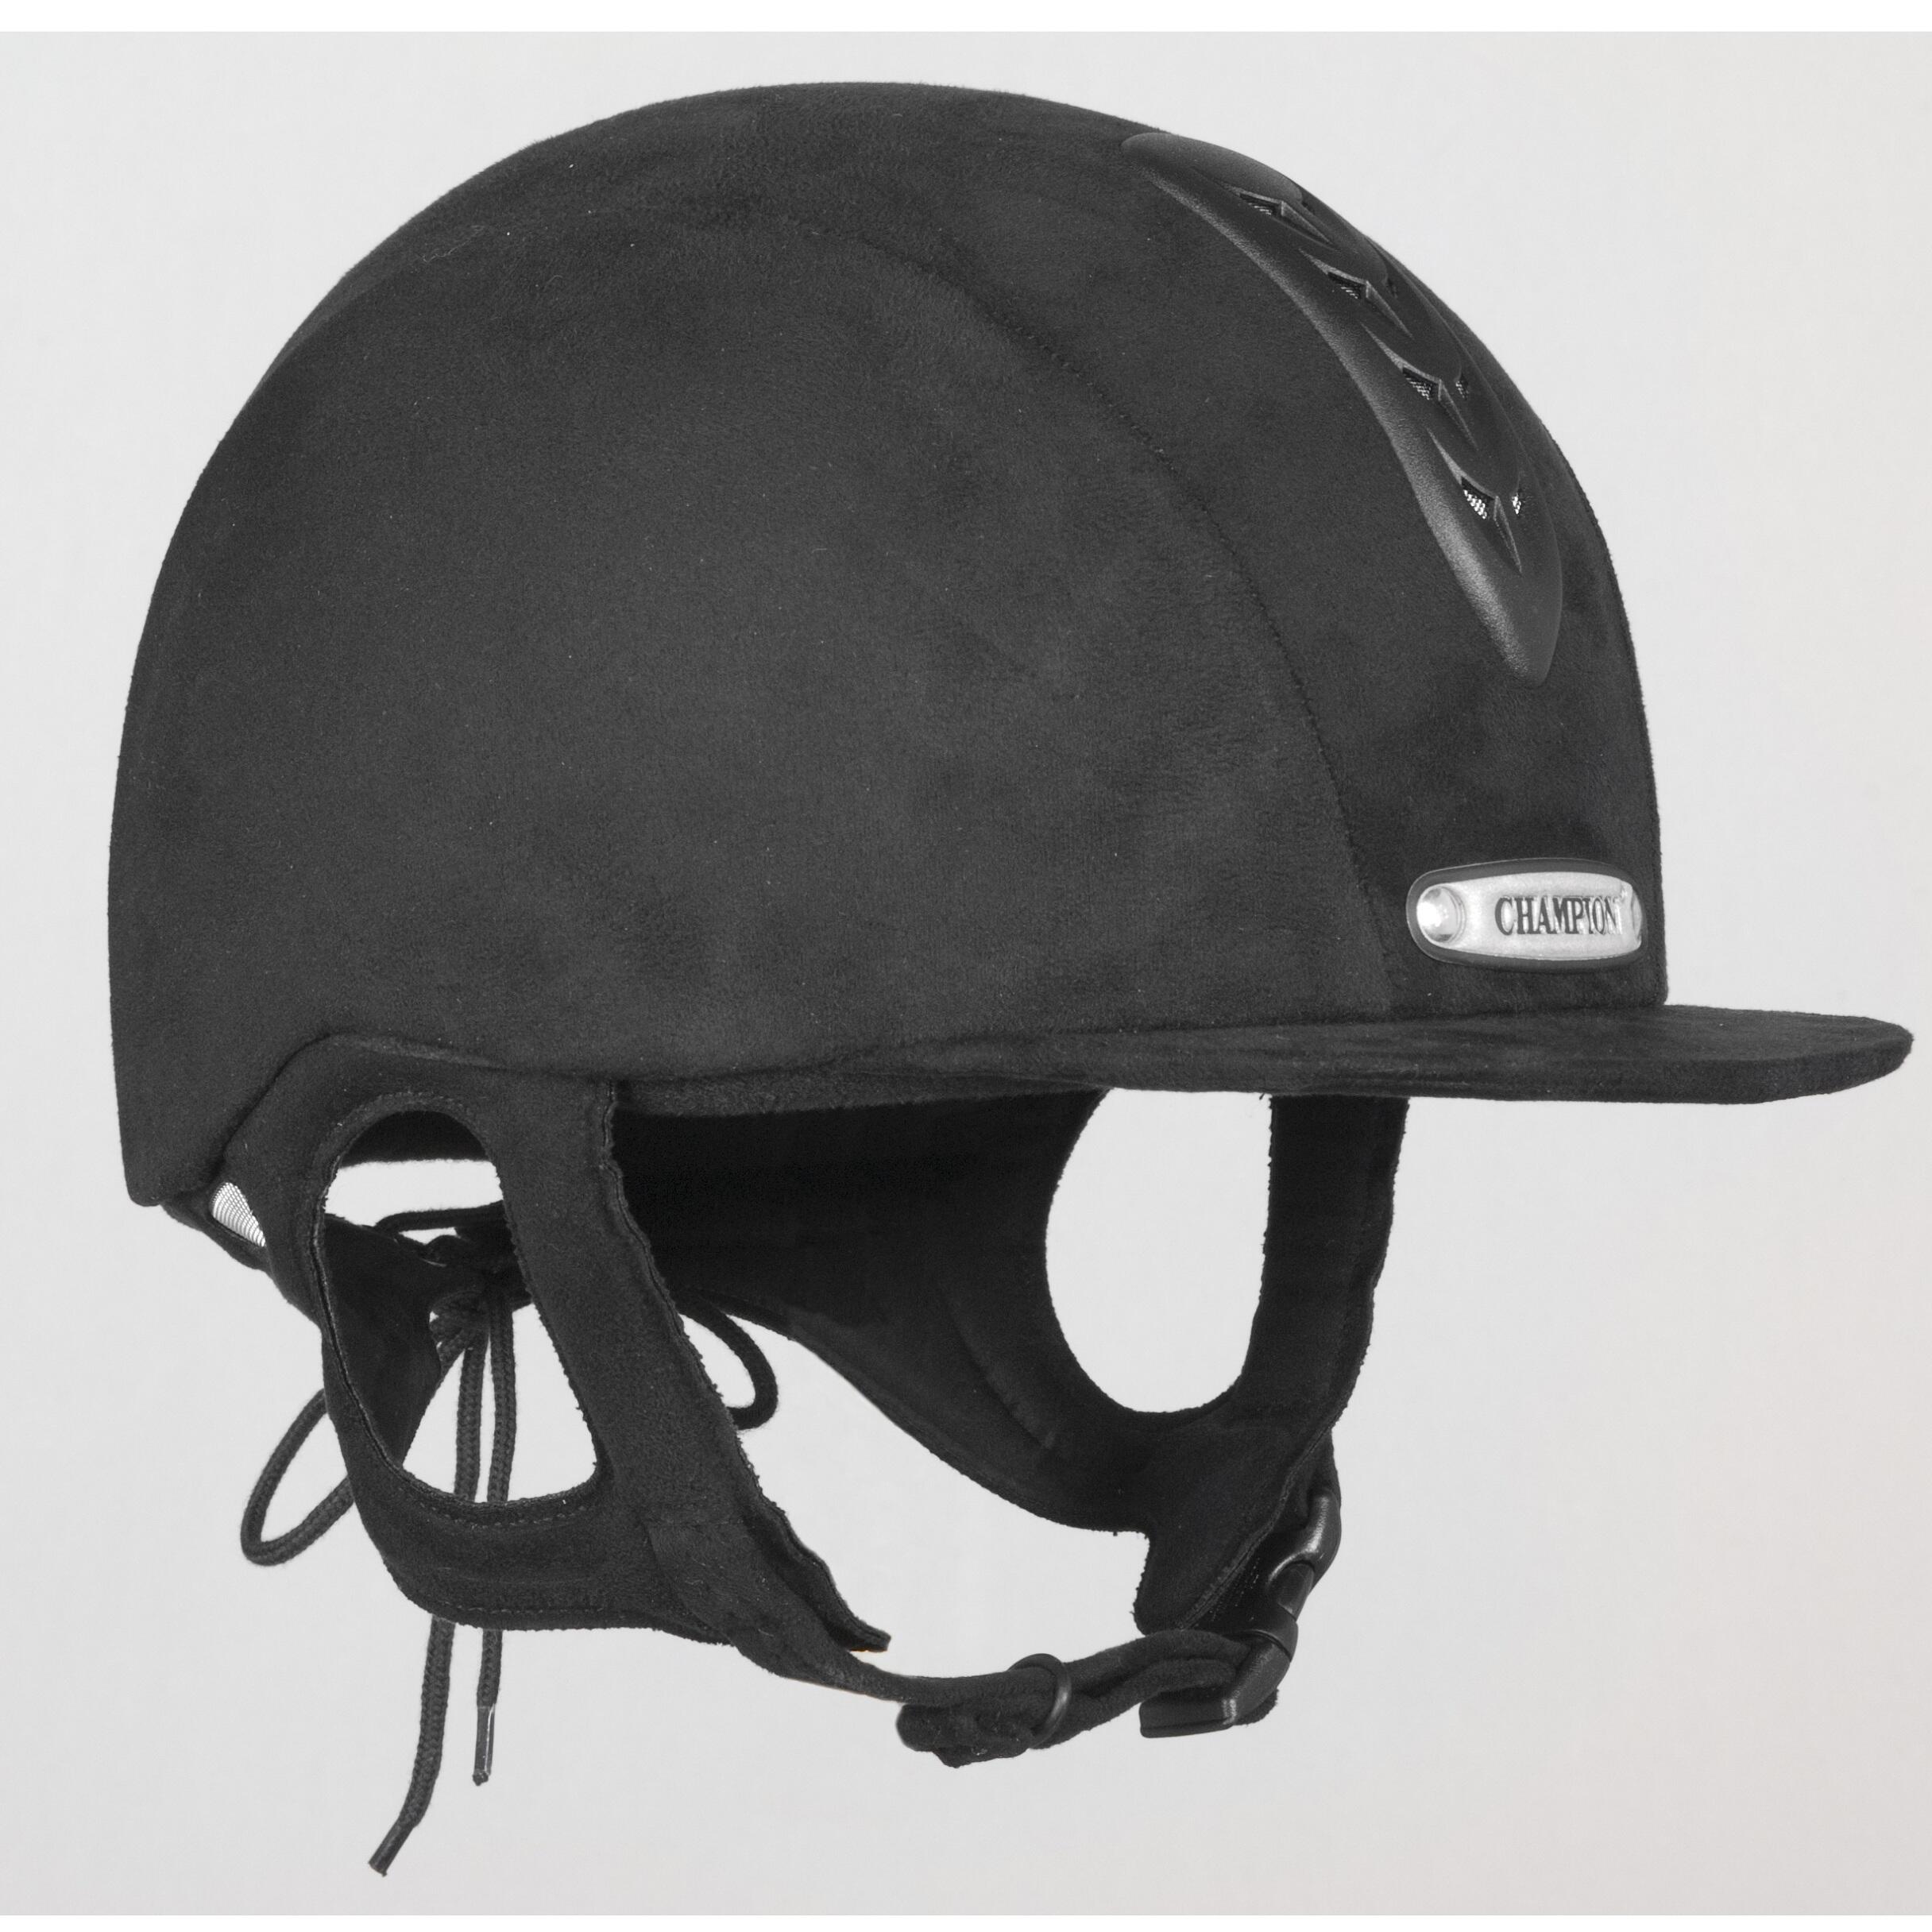 CHAMPION HATS X-Air Riding Helmet - Black